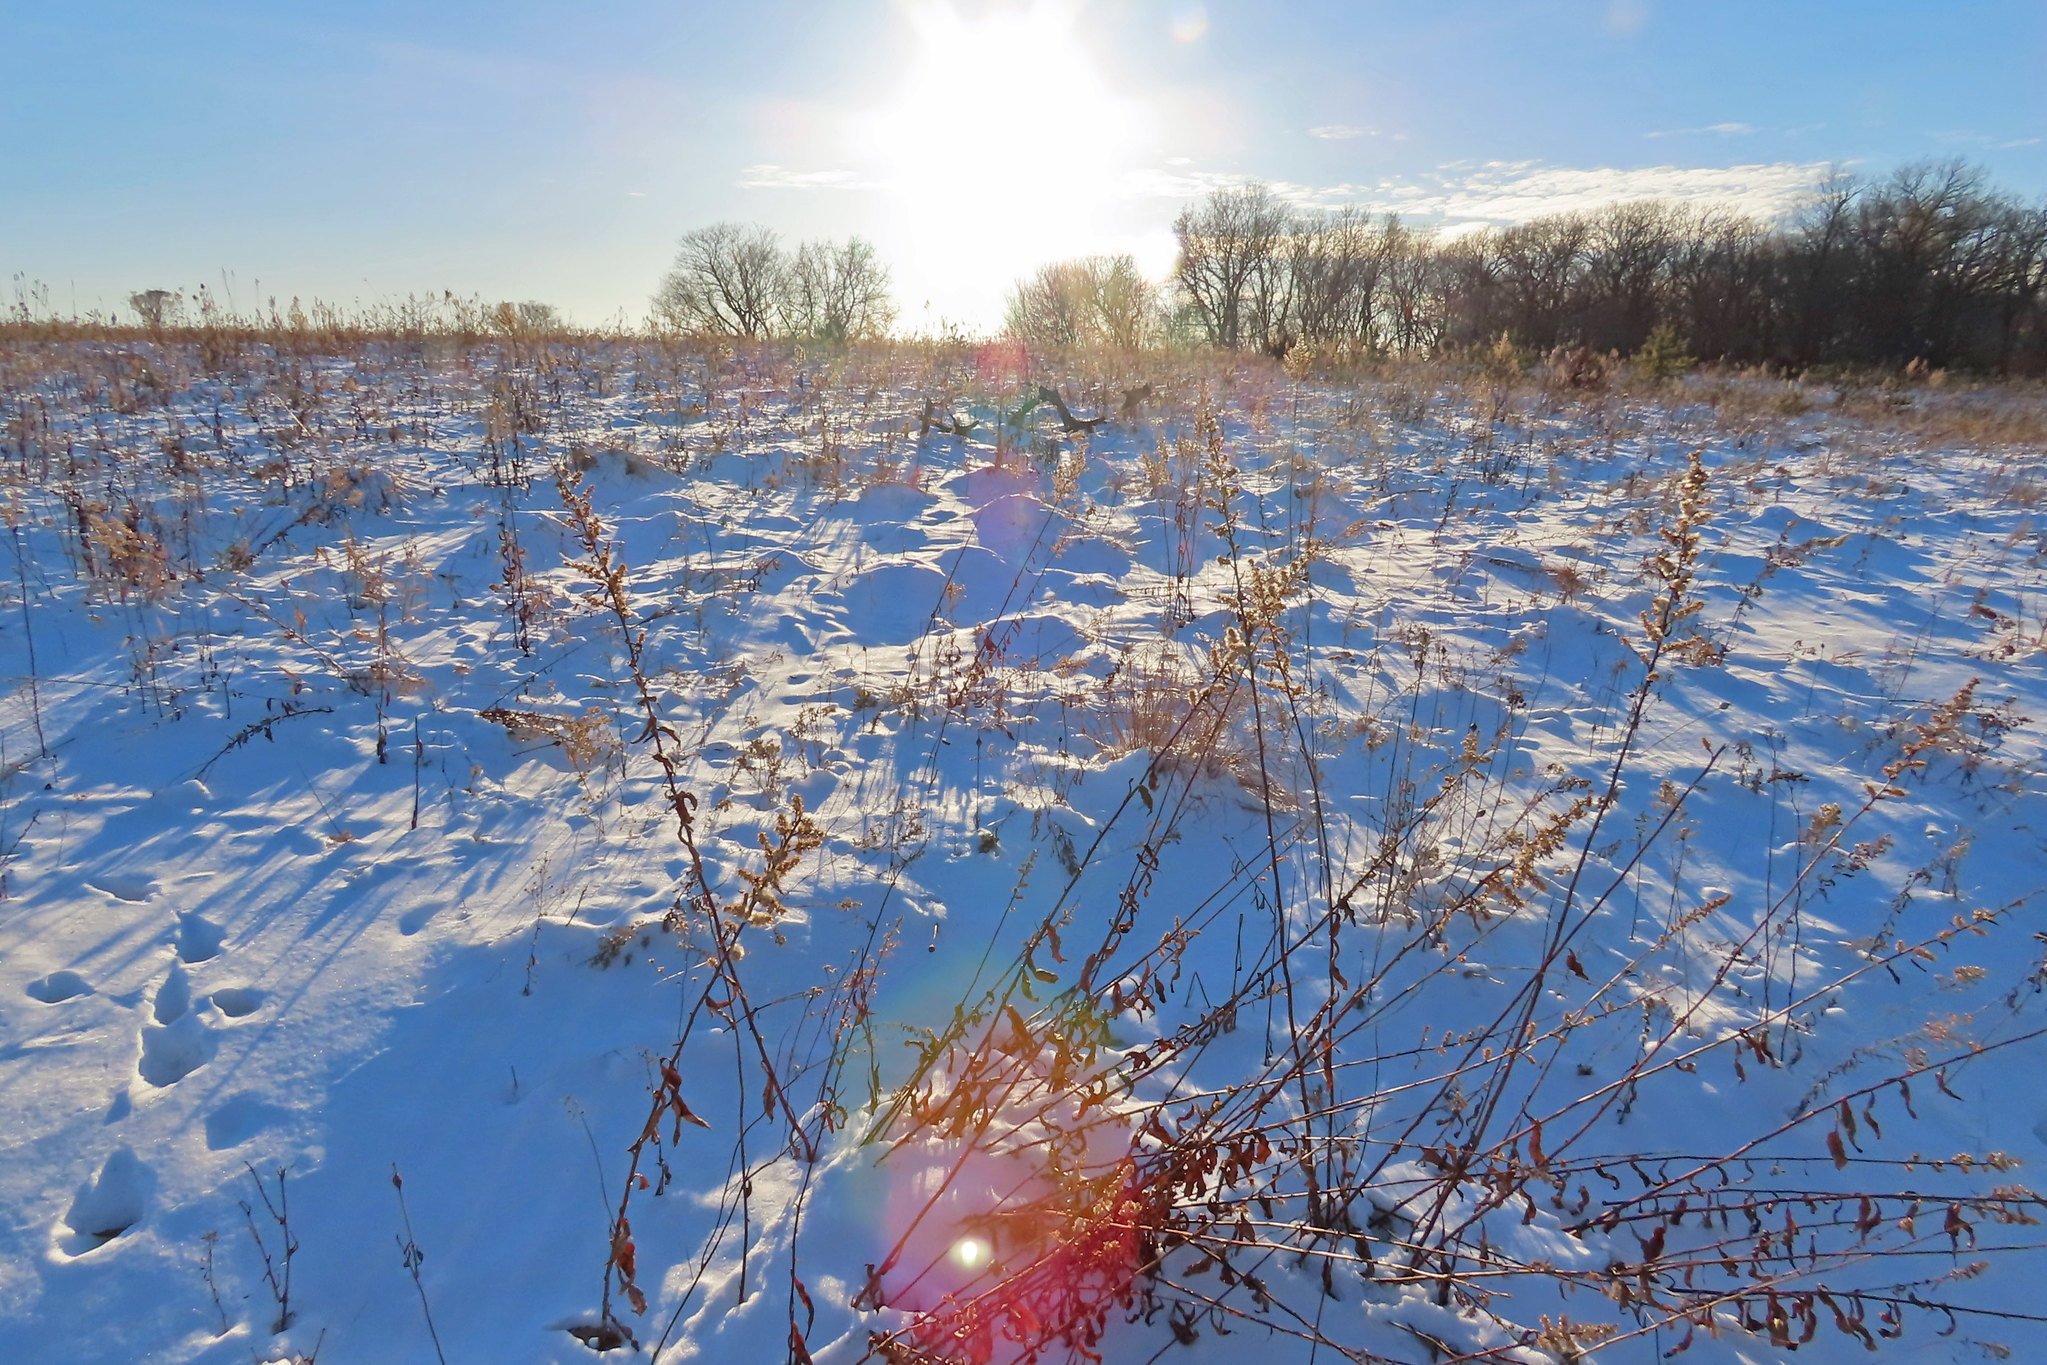 Grasslands in the snow